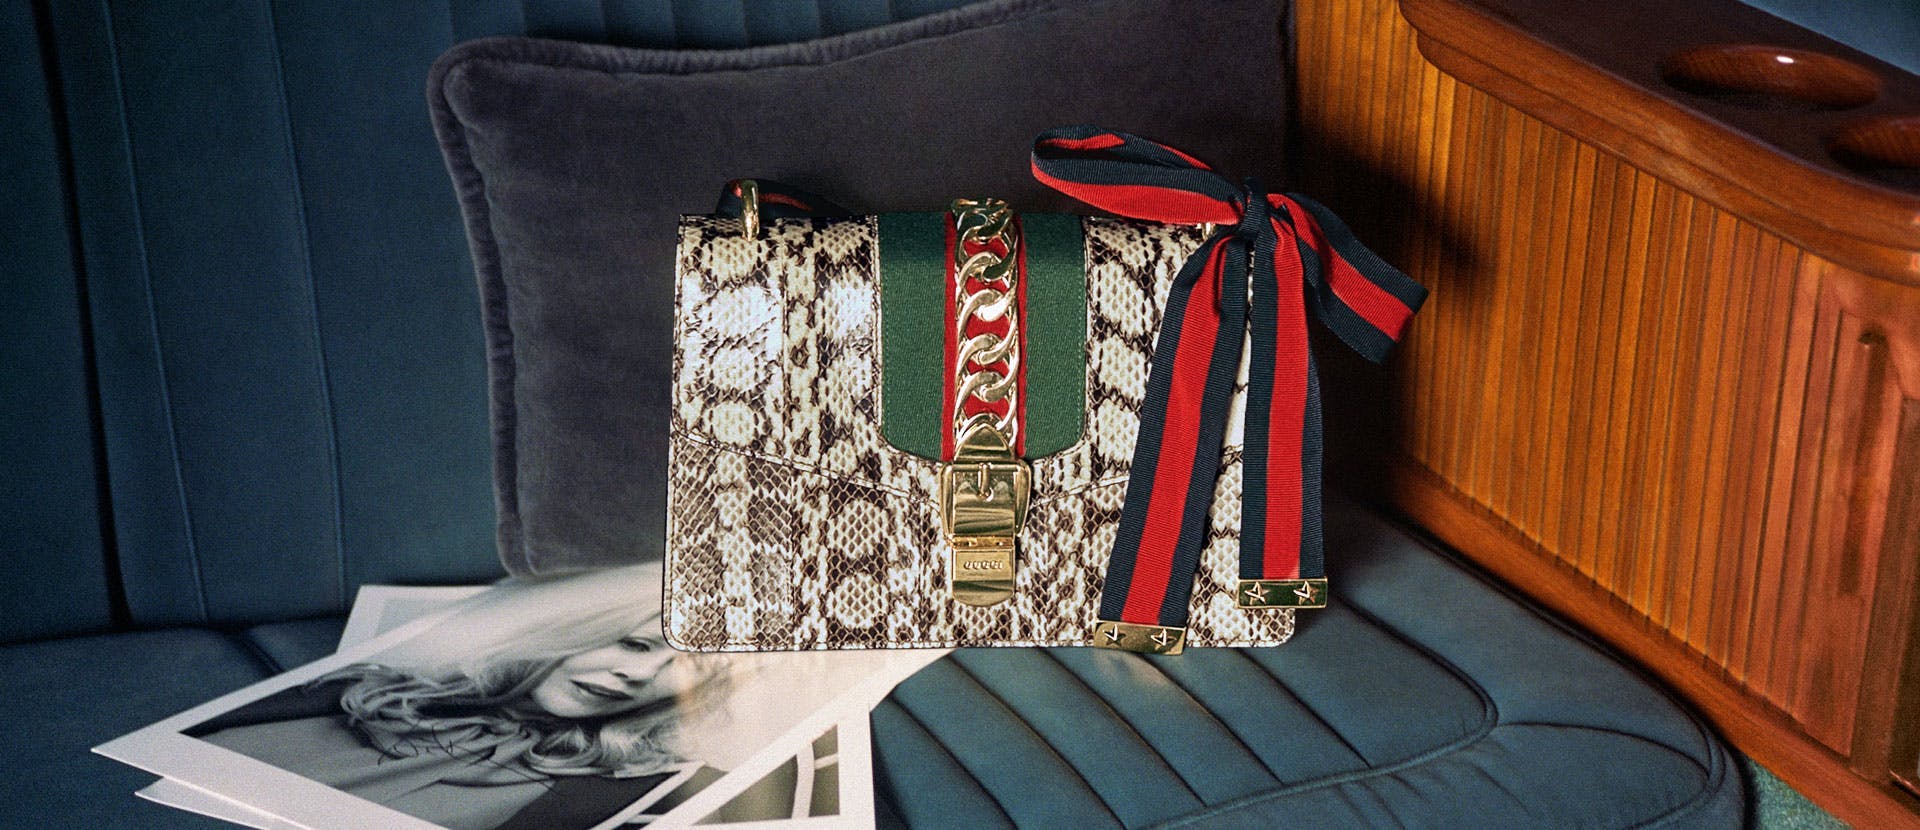 accessory accessories handbag bag purse